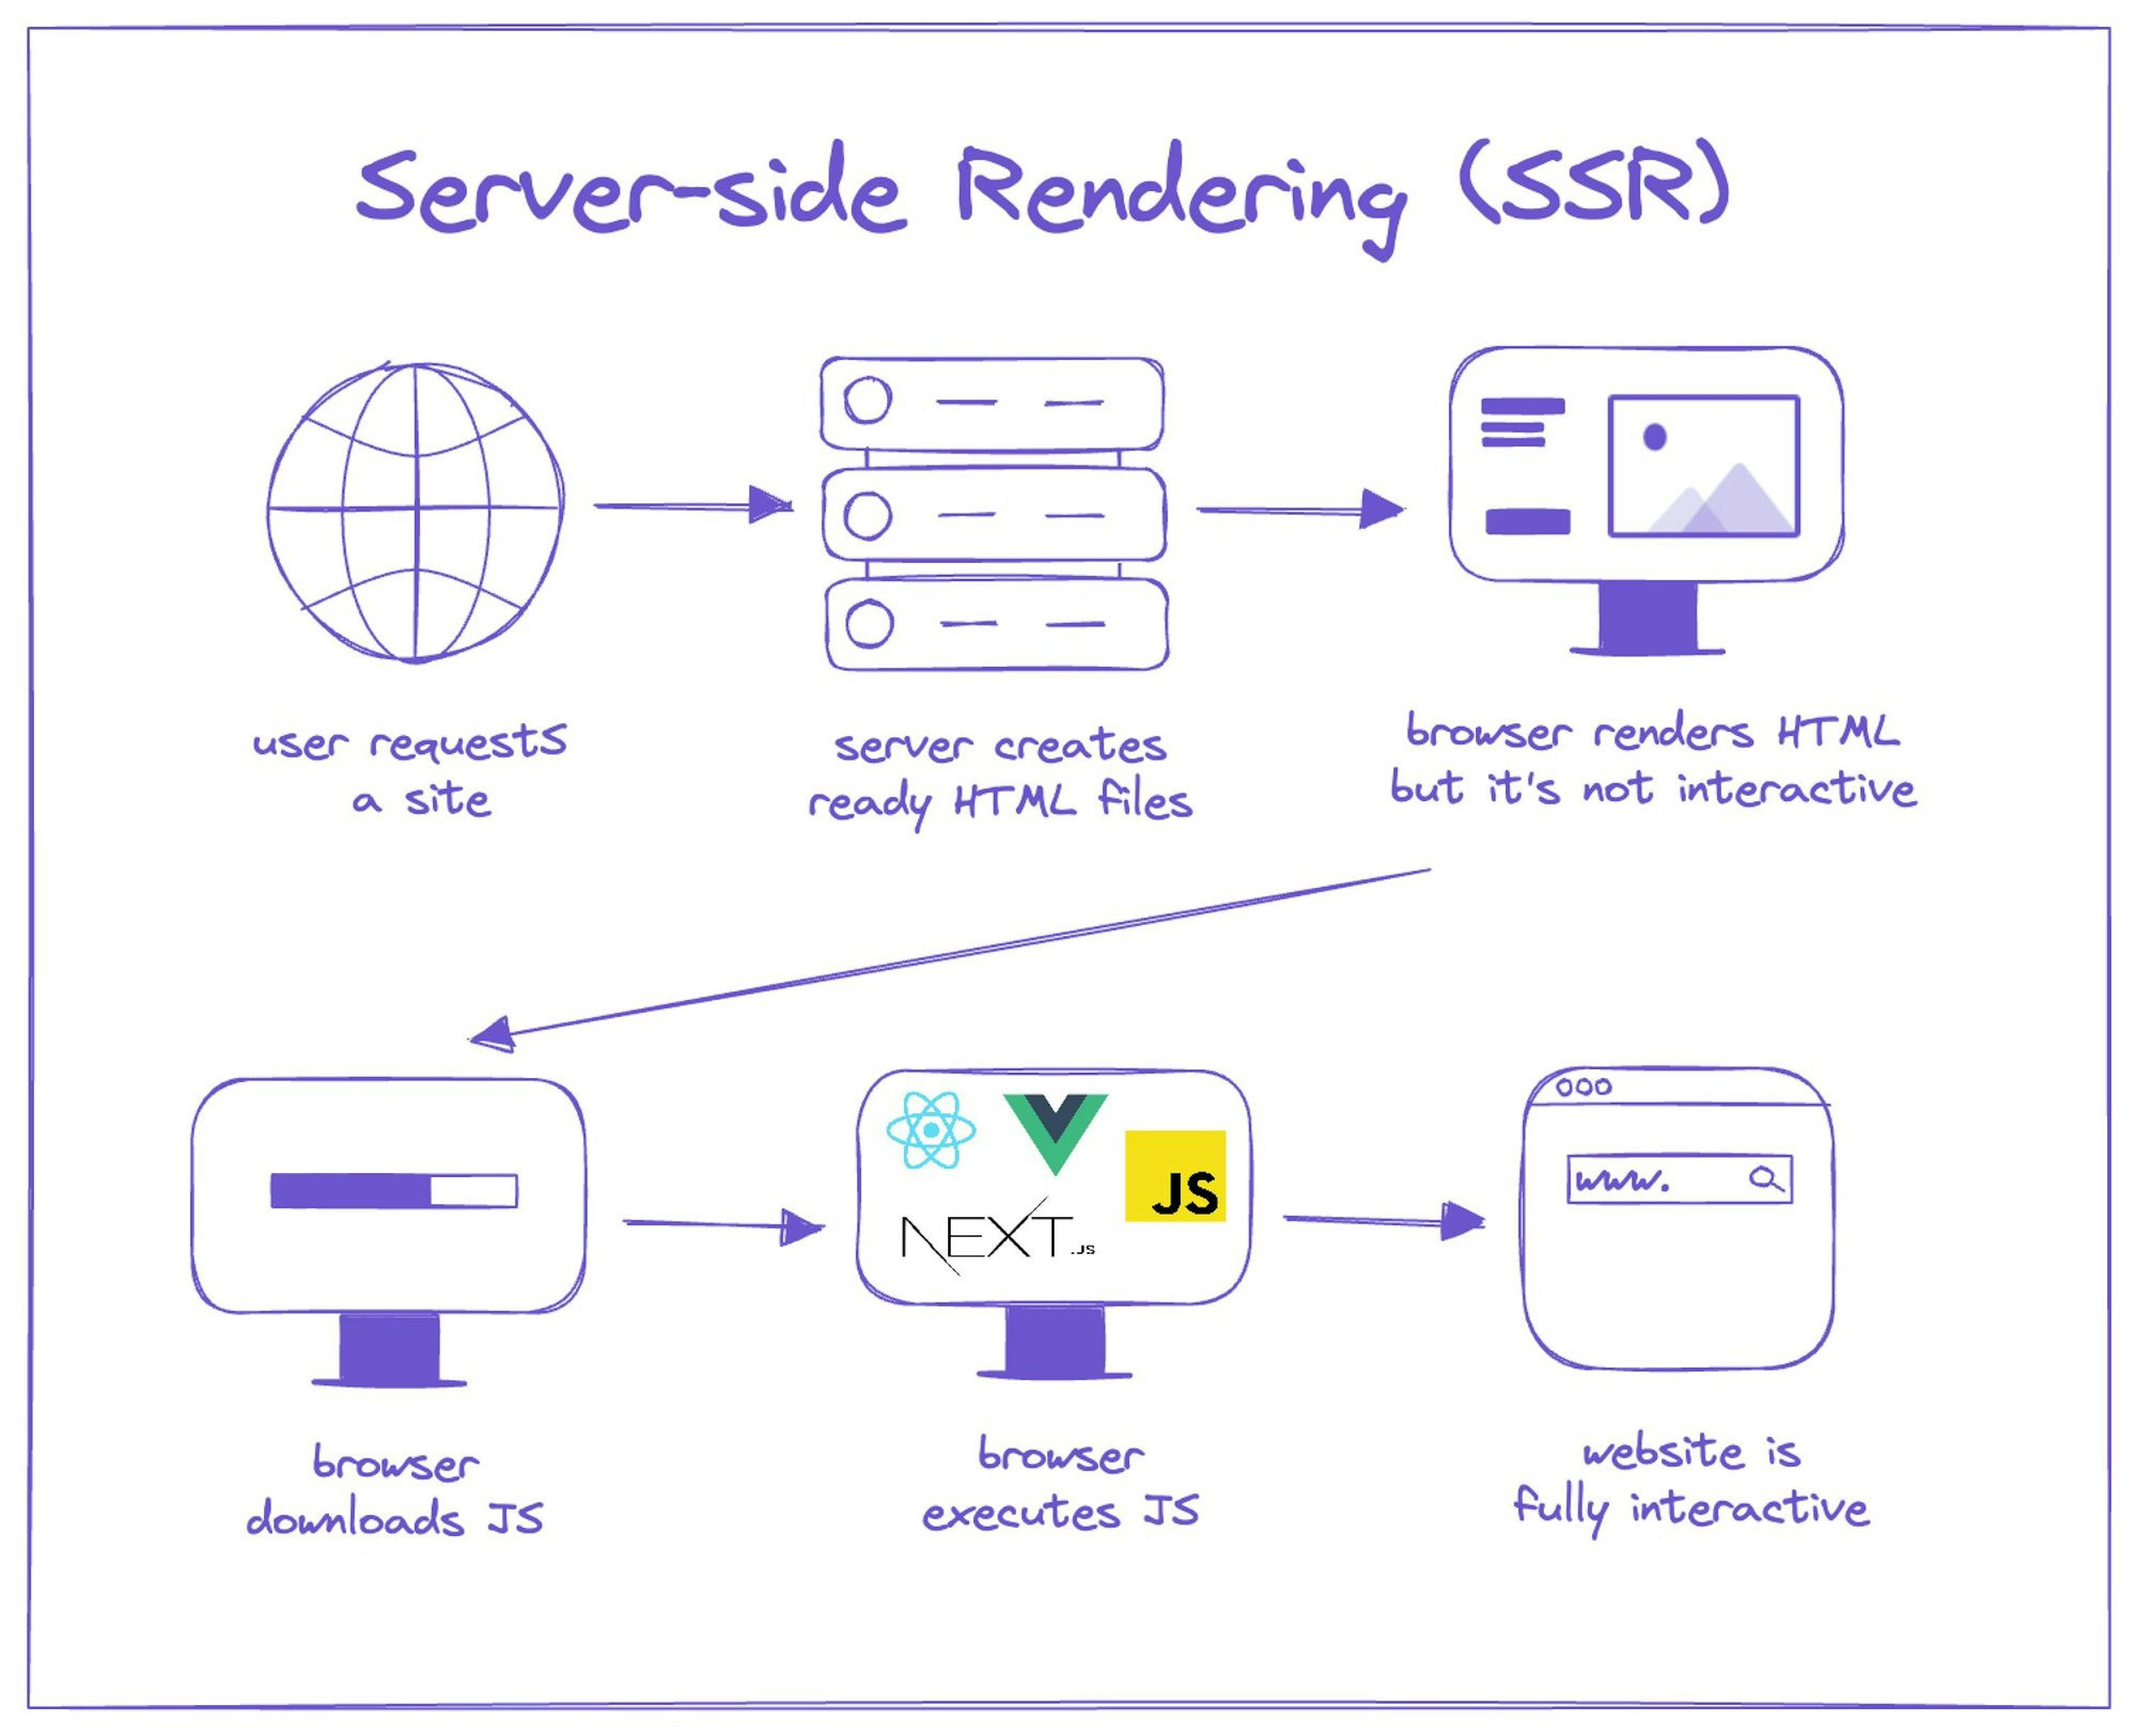 Server-side rendering diagram.